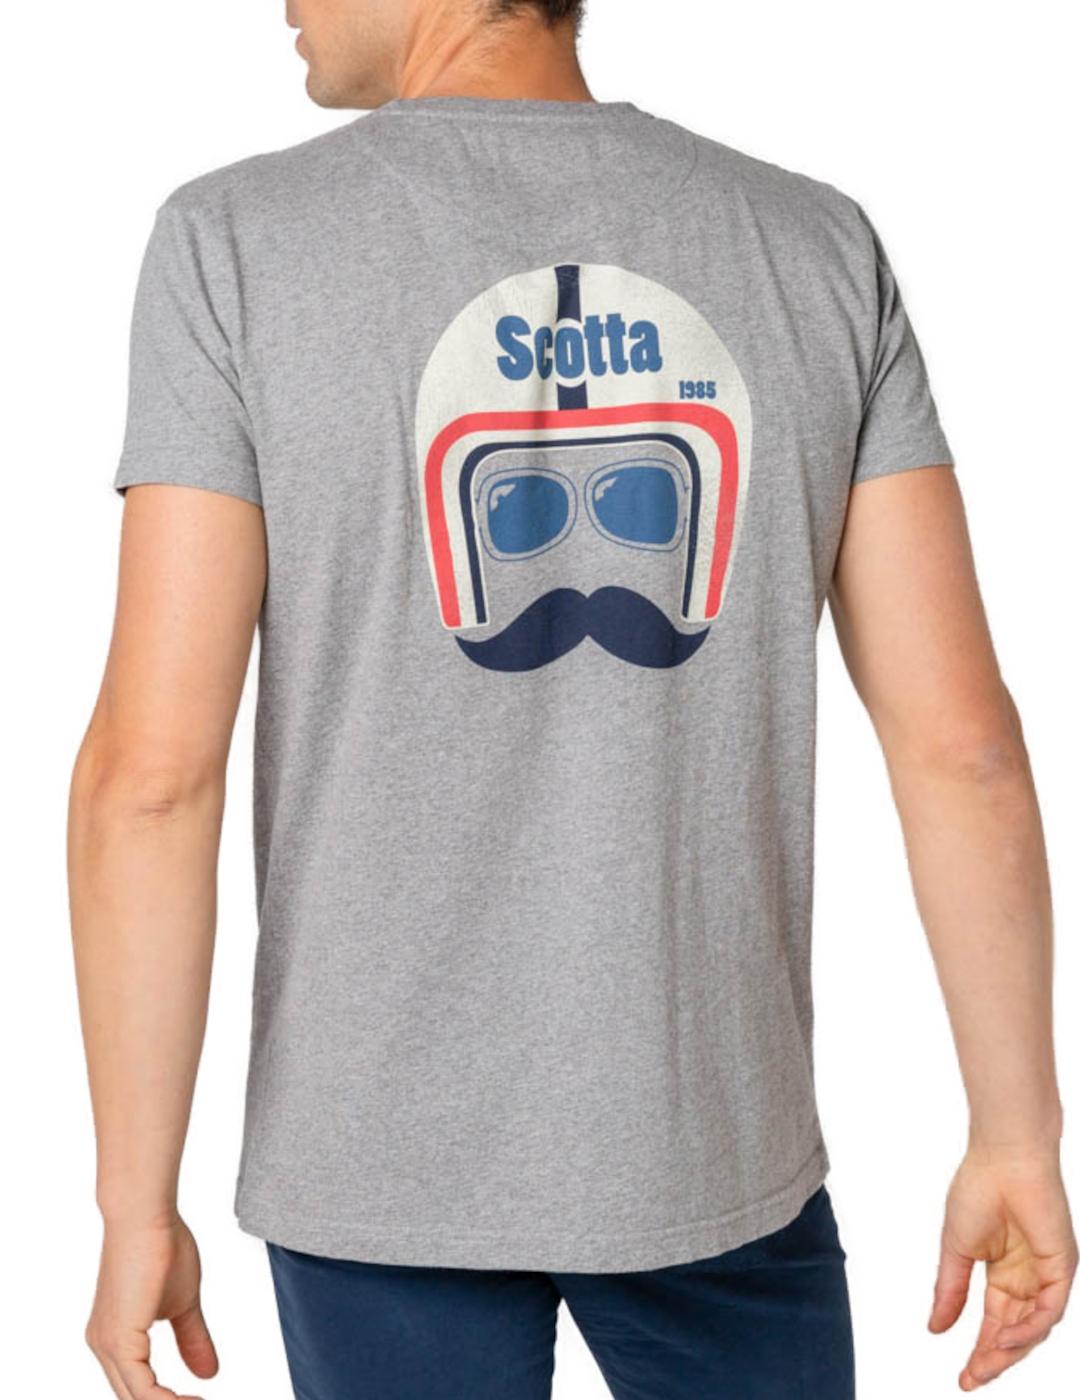 Camiseta Scotta helmet gris para hombre-z